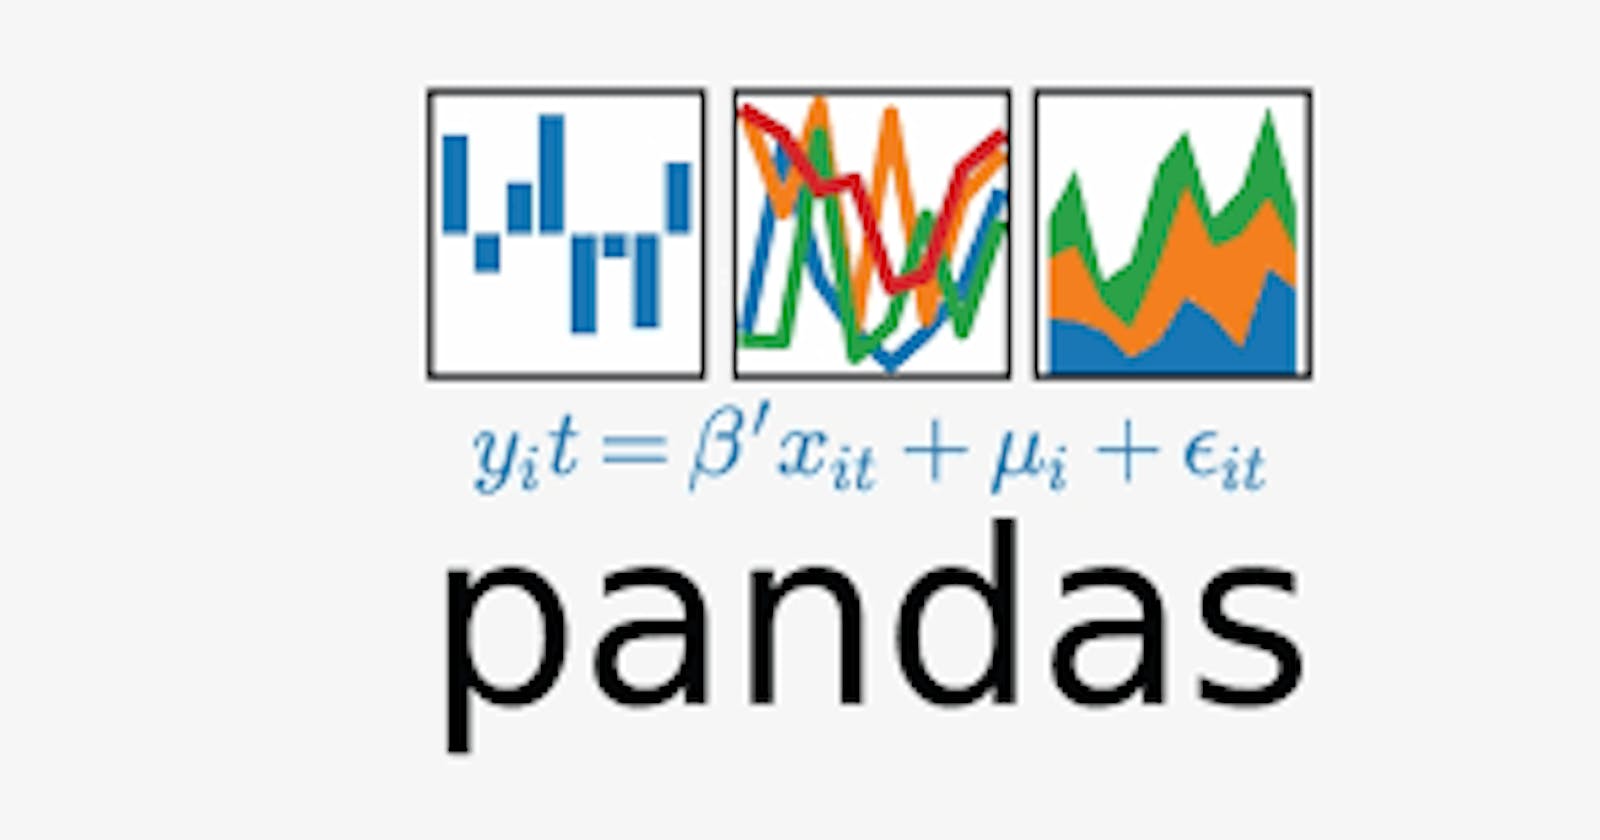 Pandas in Data Science